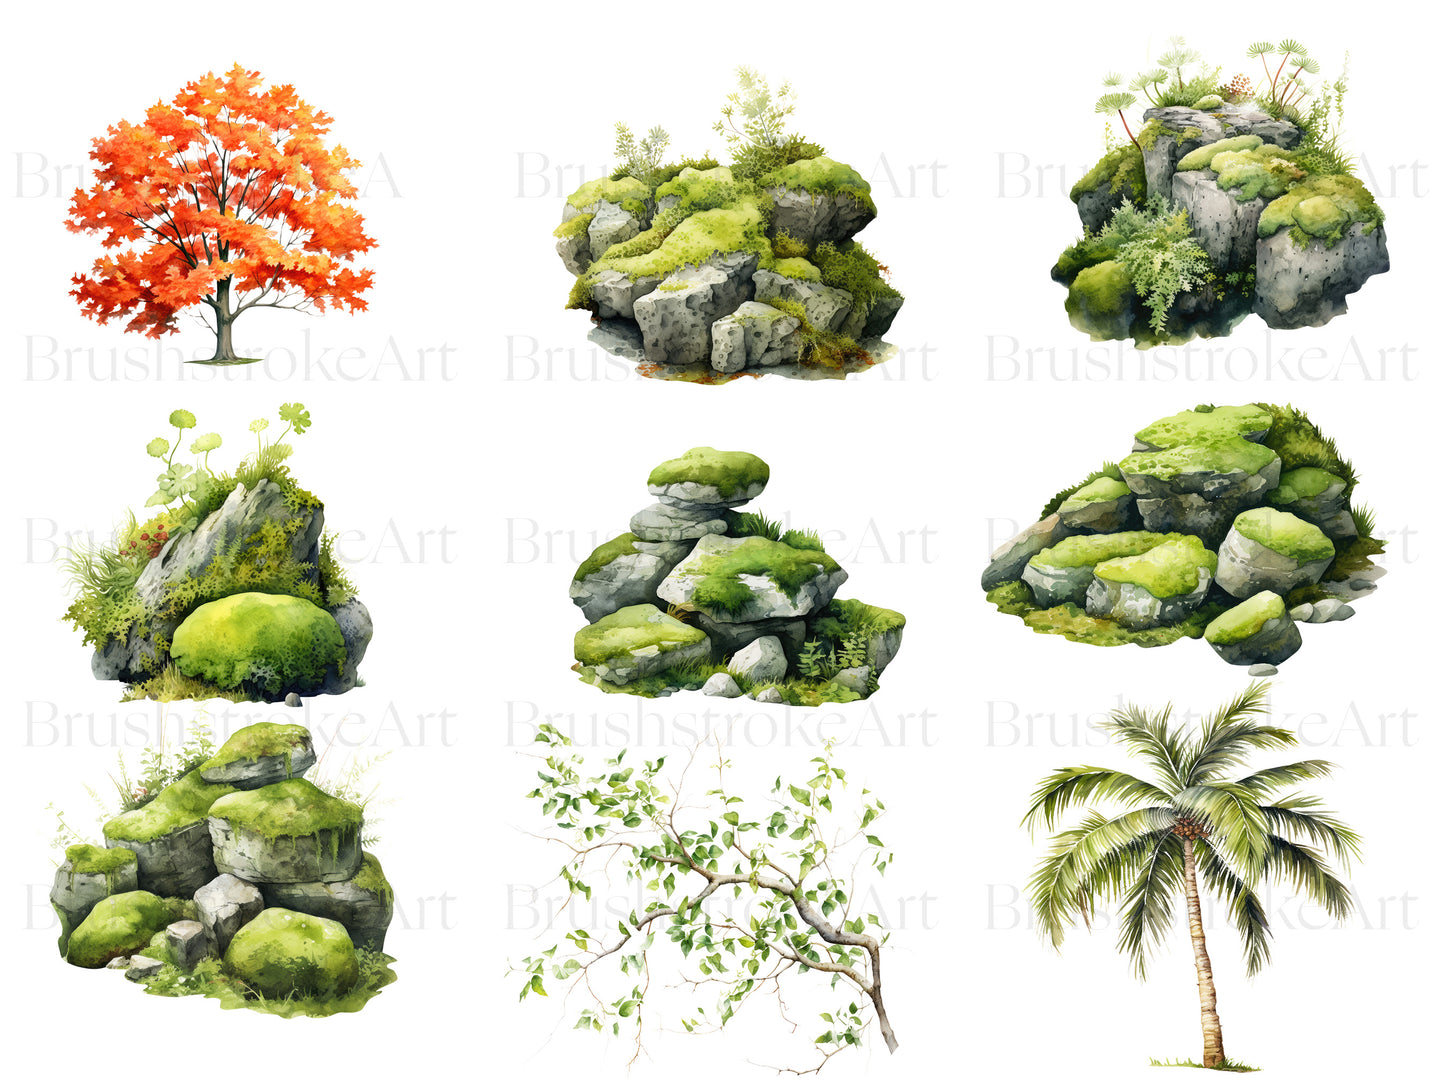 Watercolor Trees